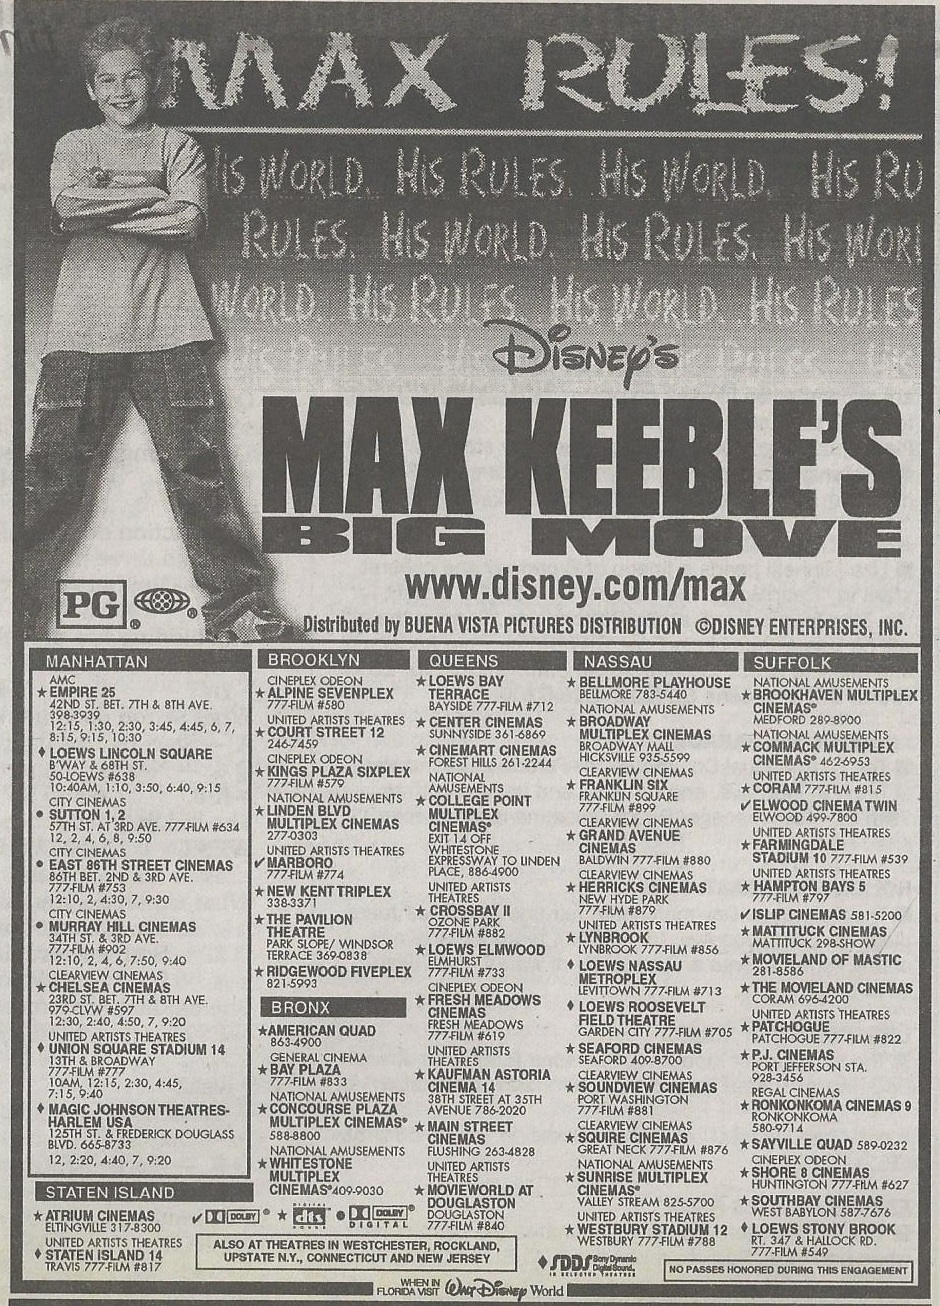 Max keeble's big move movie